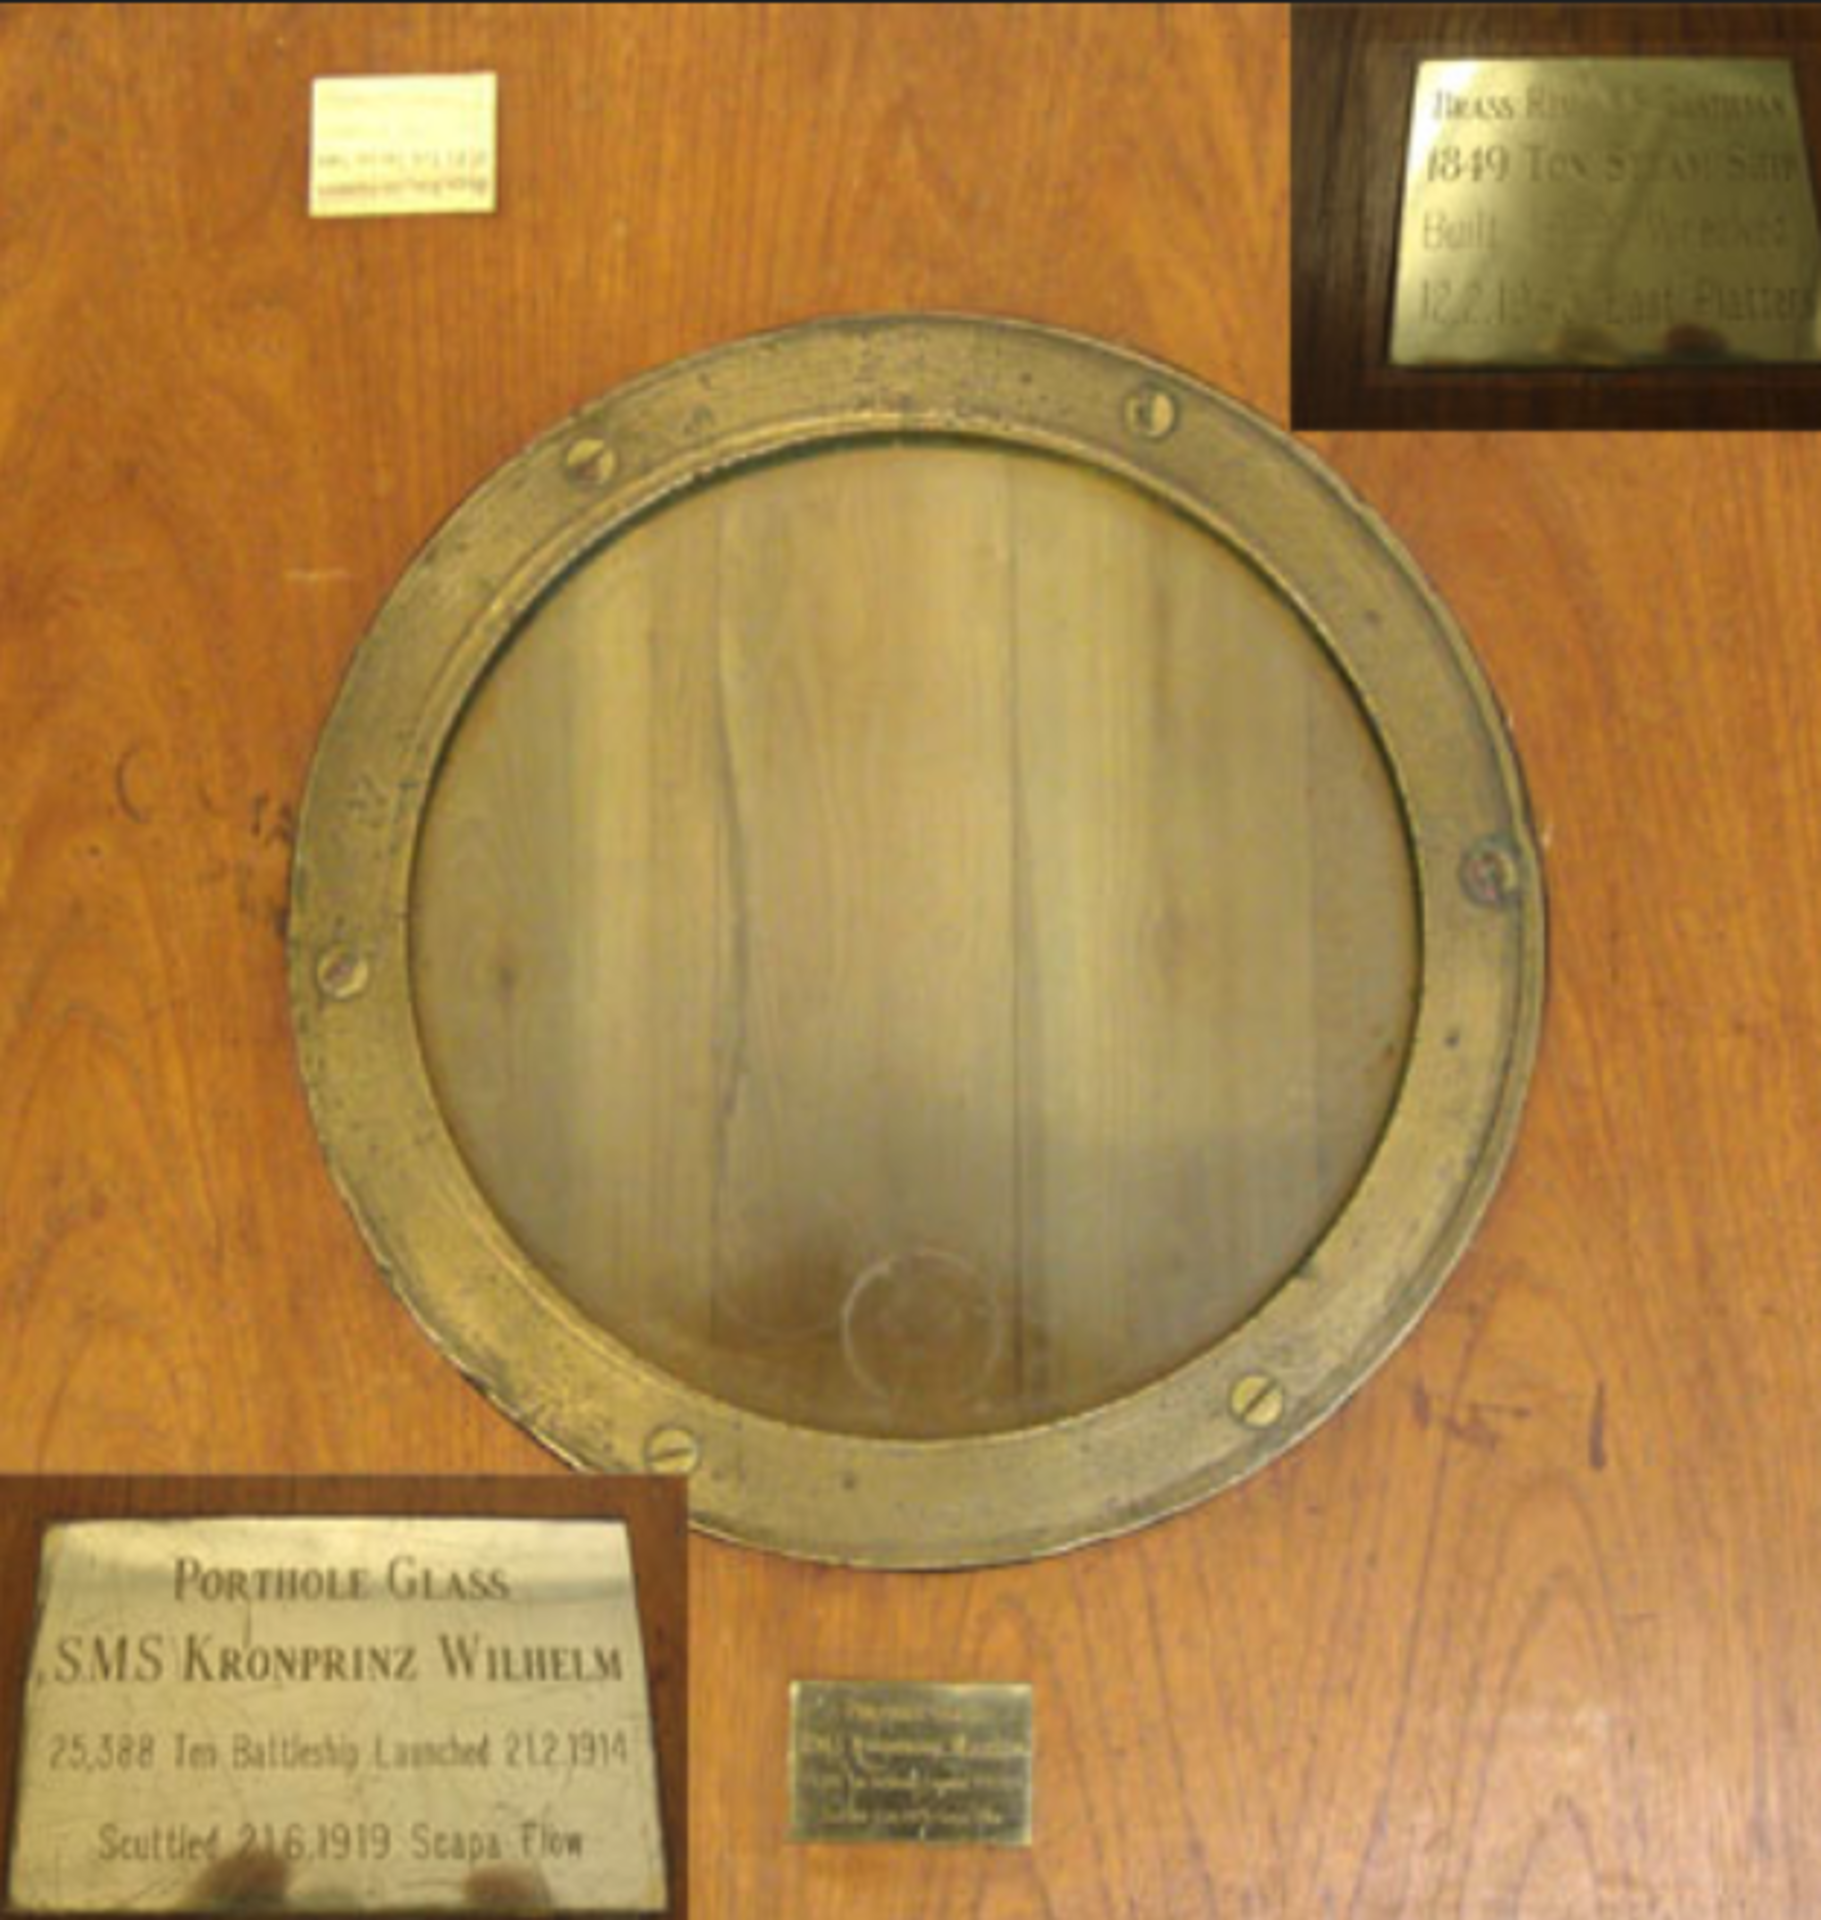 SS Catilian Porthole Rim Recovered From Scapa Flow With Porthole Glass From SMS Kronprinz Wilhelm - Bild 3 aus 3